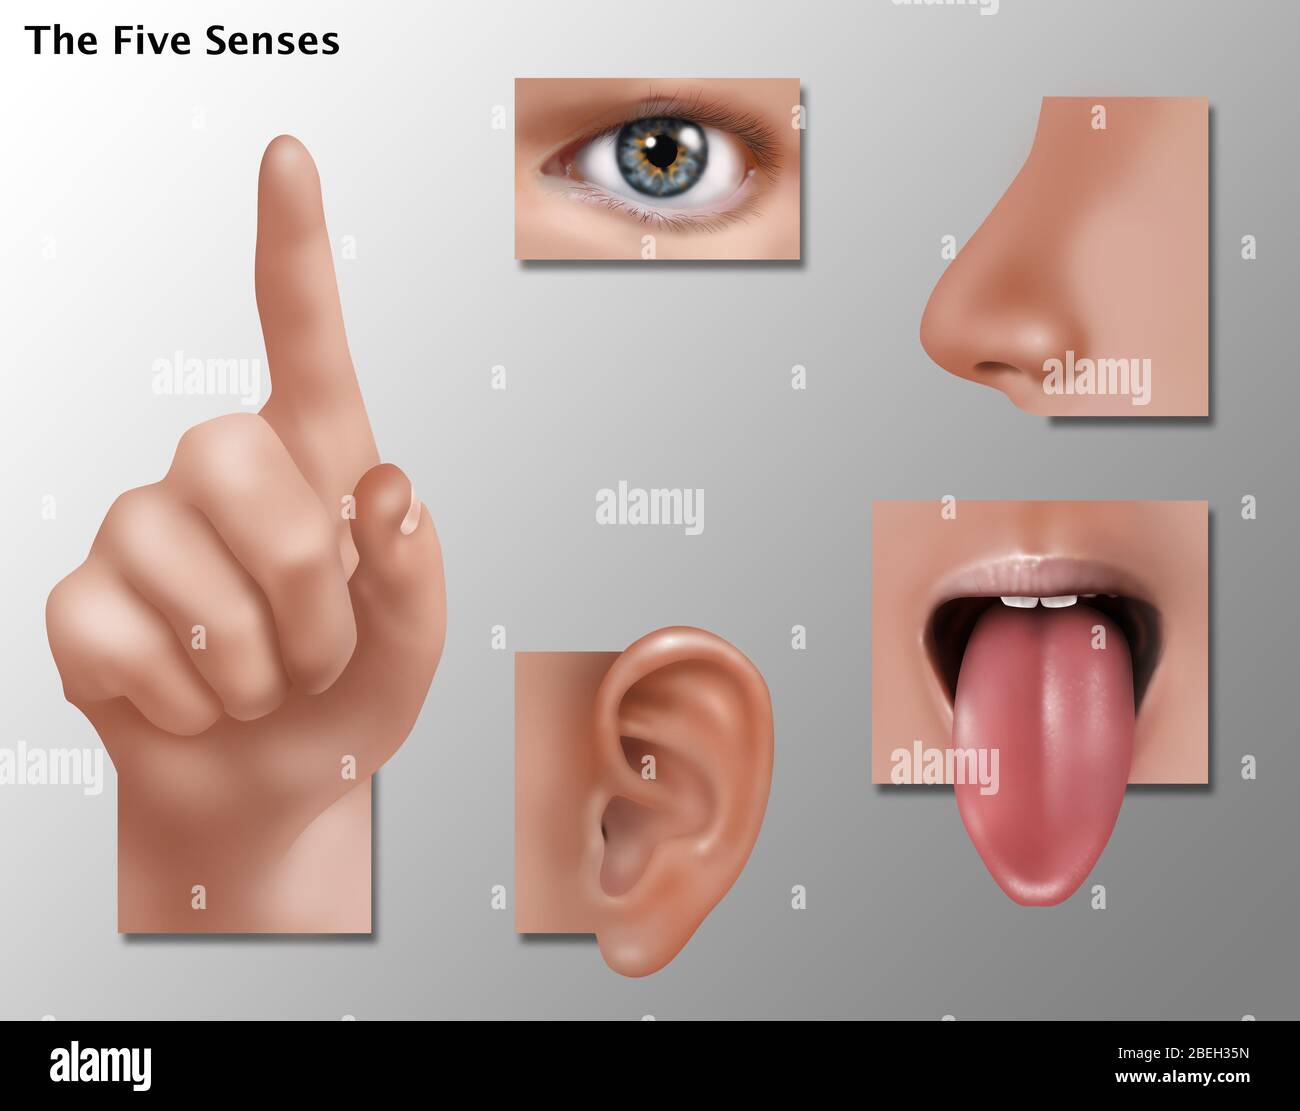 Five Senses, Illustration Stock Photo